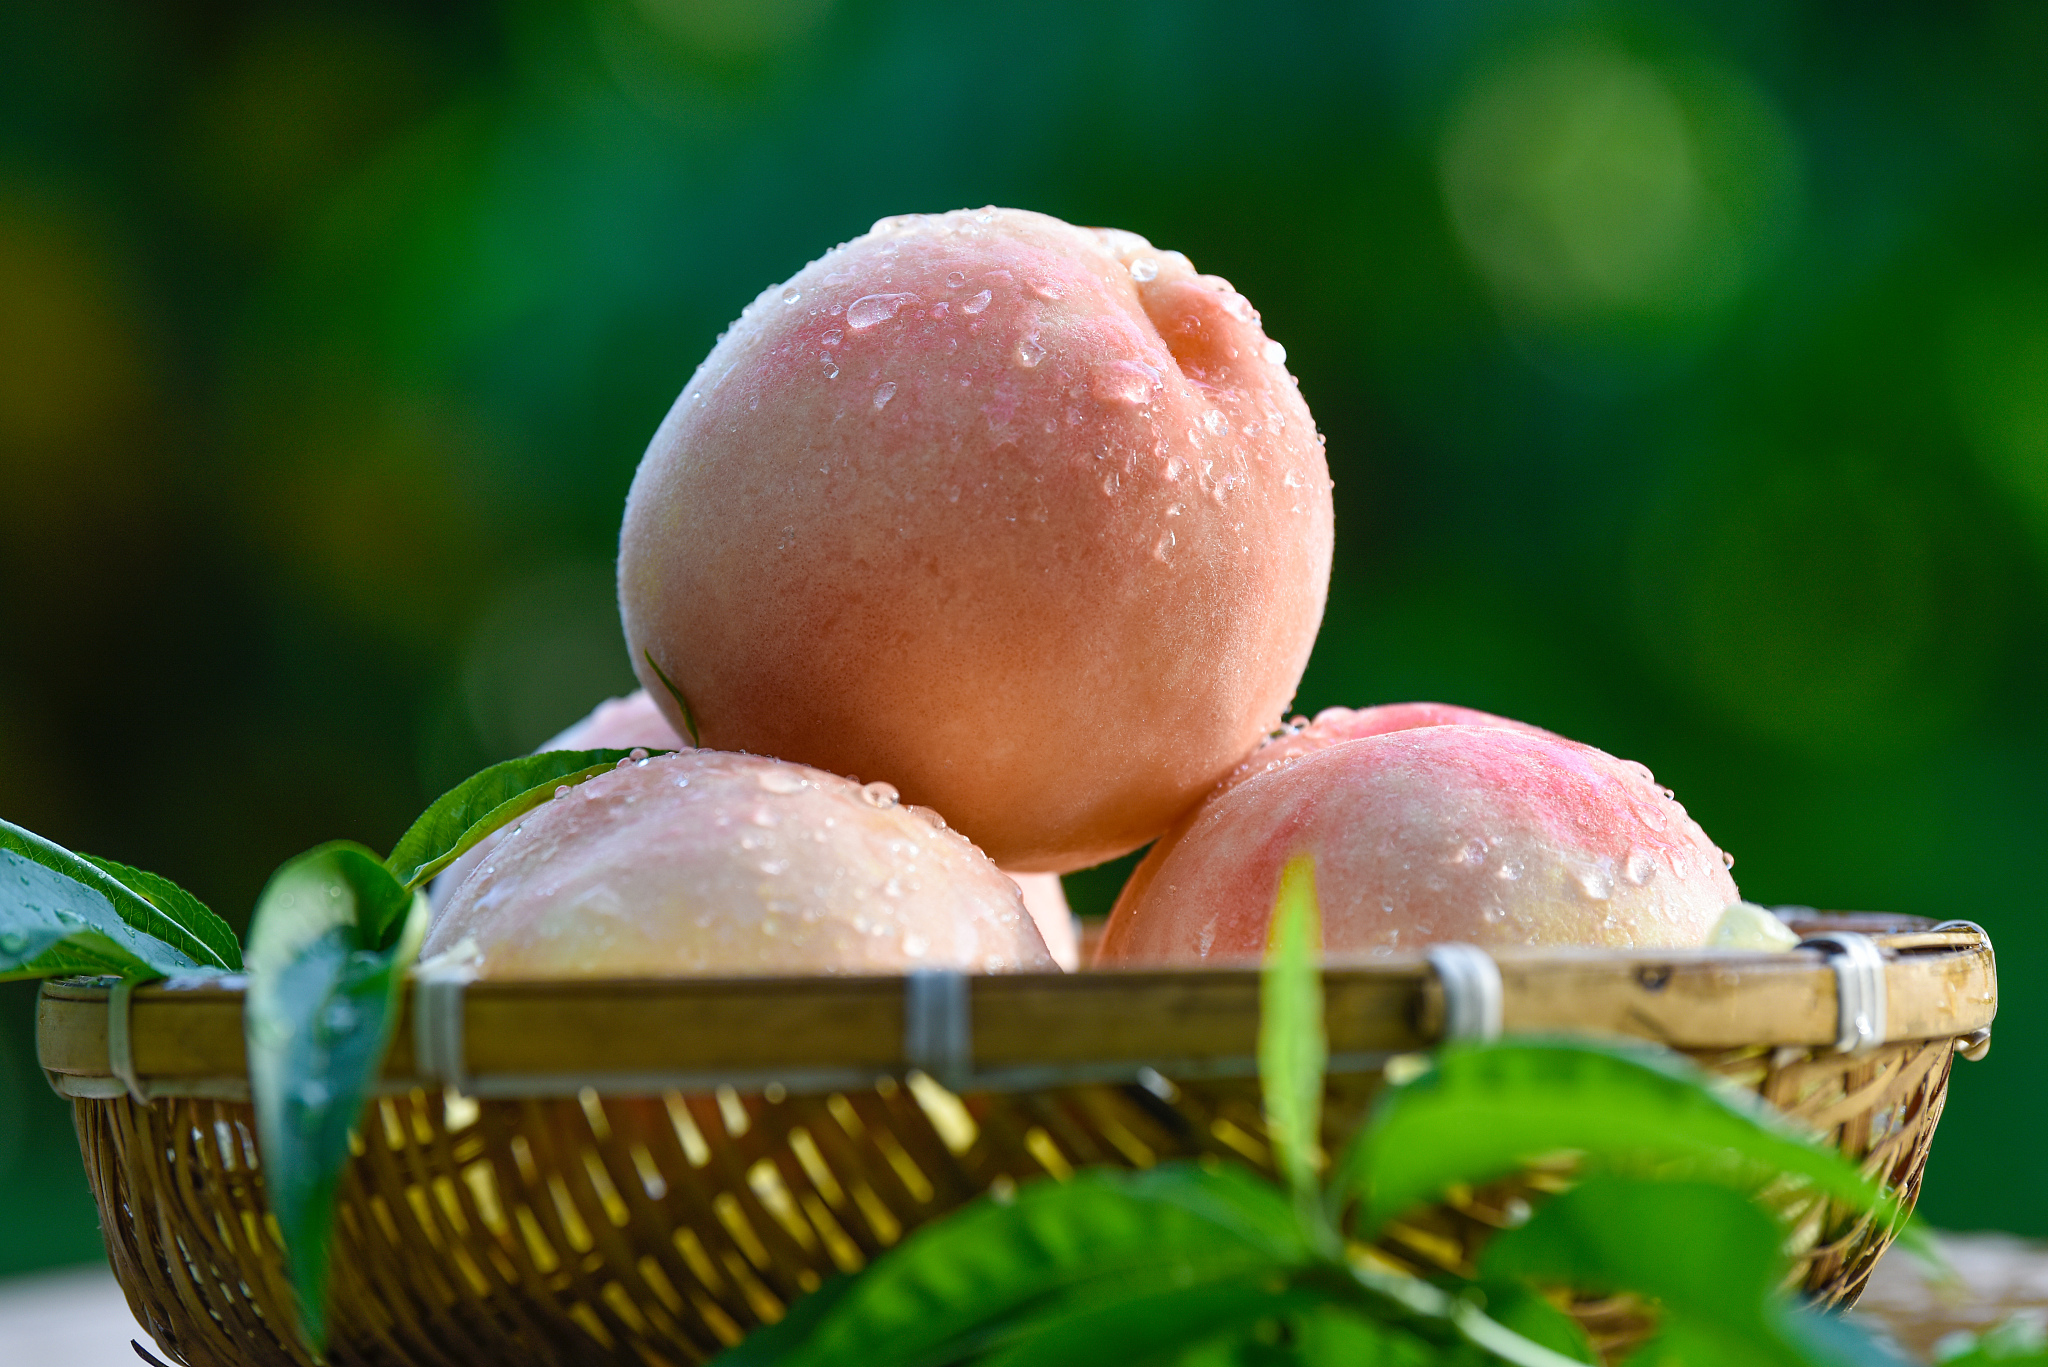 Explore Wuxi: Celebrate summer with Yangshan honey peaches